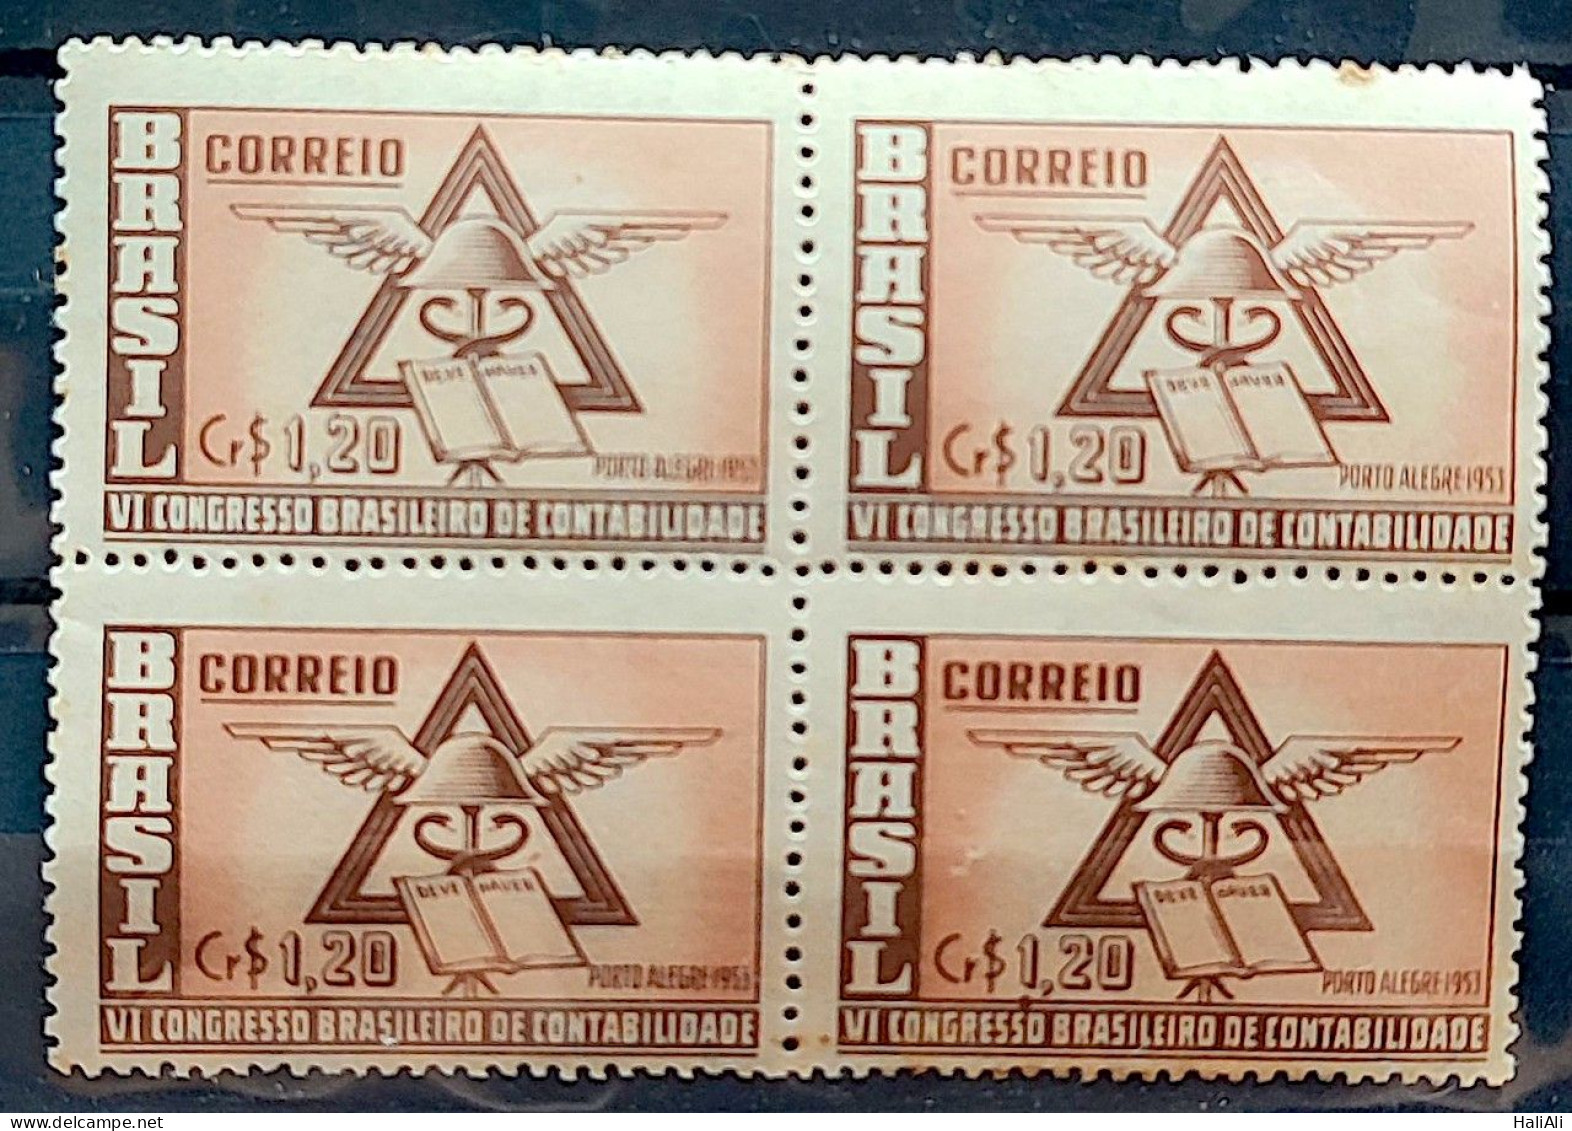 C 296 Brazil Stamp Accounting Congress Porto Alegre Economy 1953 Block Of 4 2 - Unused Stamps